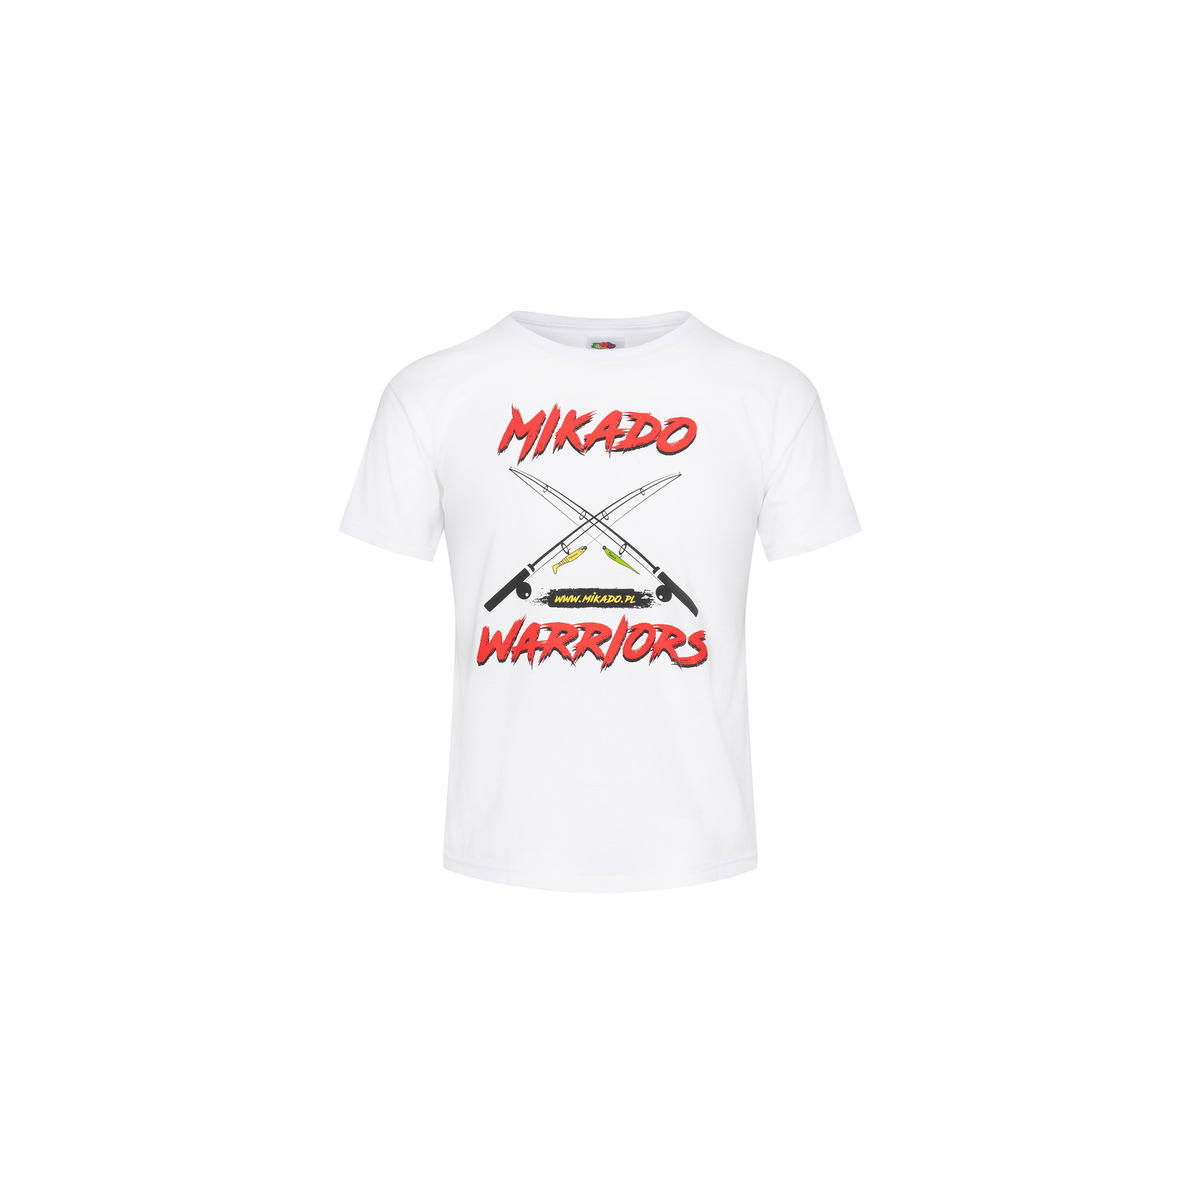 Mikado Tshirt With Overprint - KIDS WARRIORS  size 164  WHITE